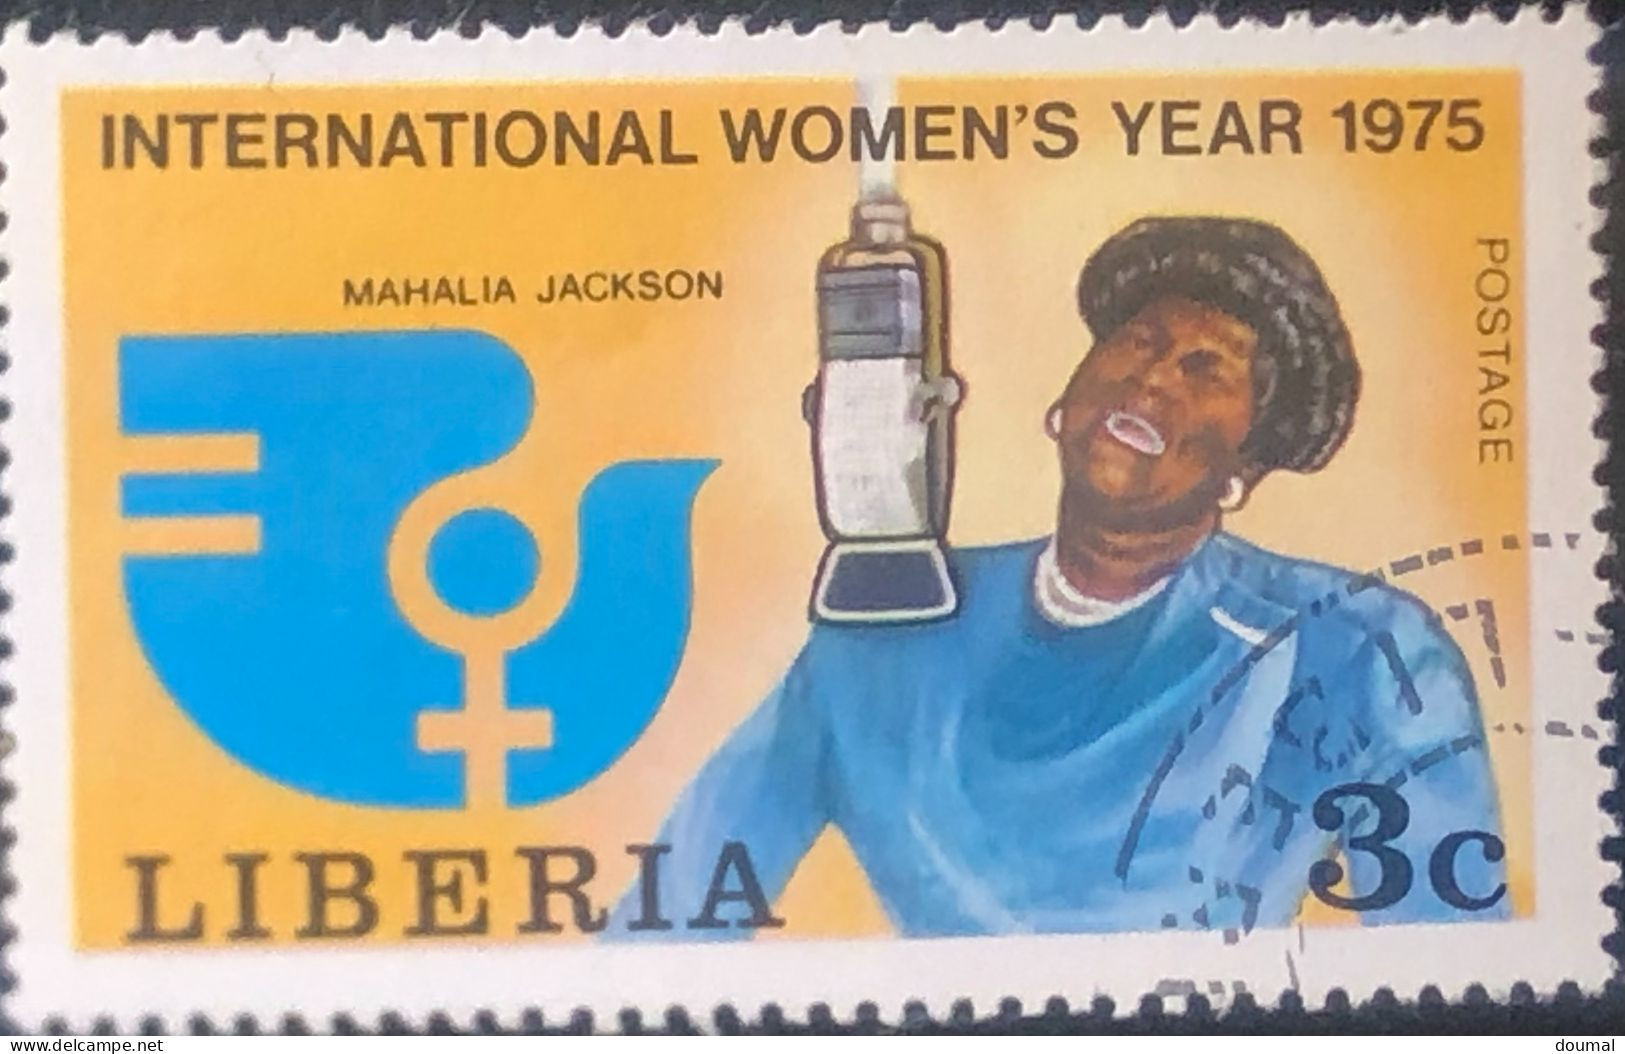 Liberia Woman's Year 1975 - Liberia